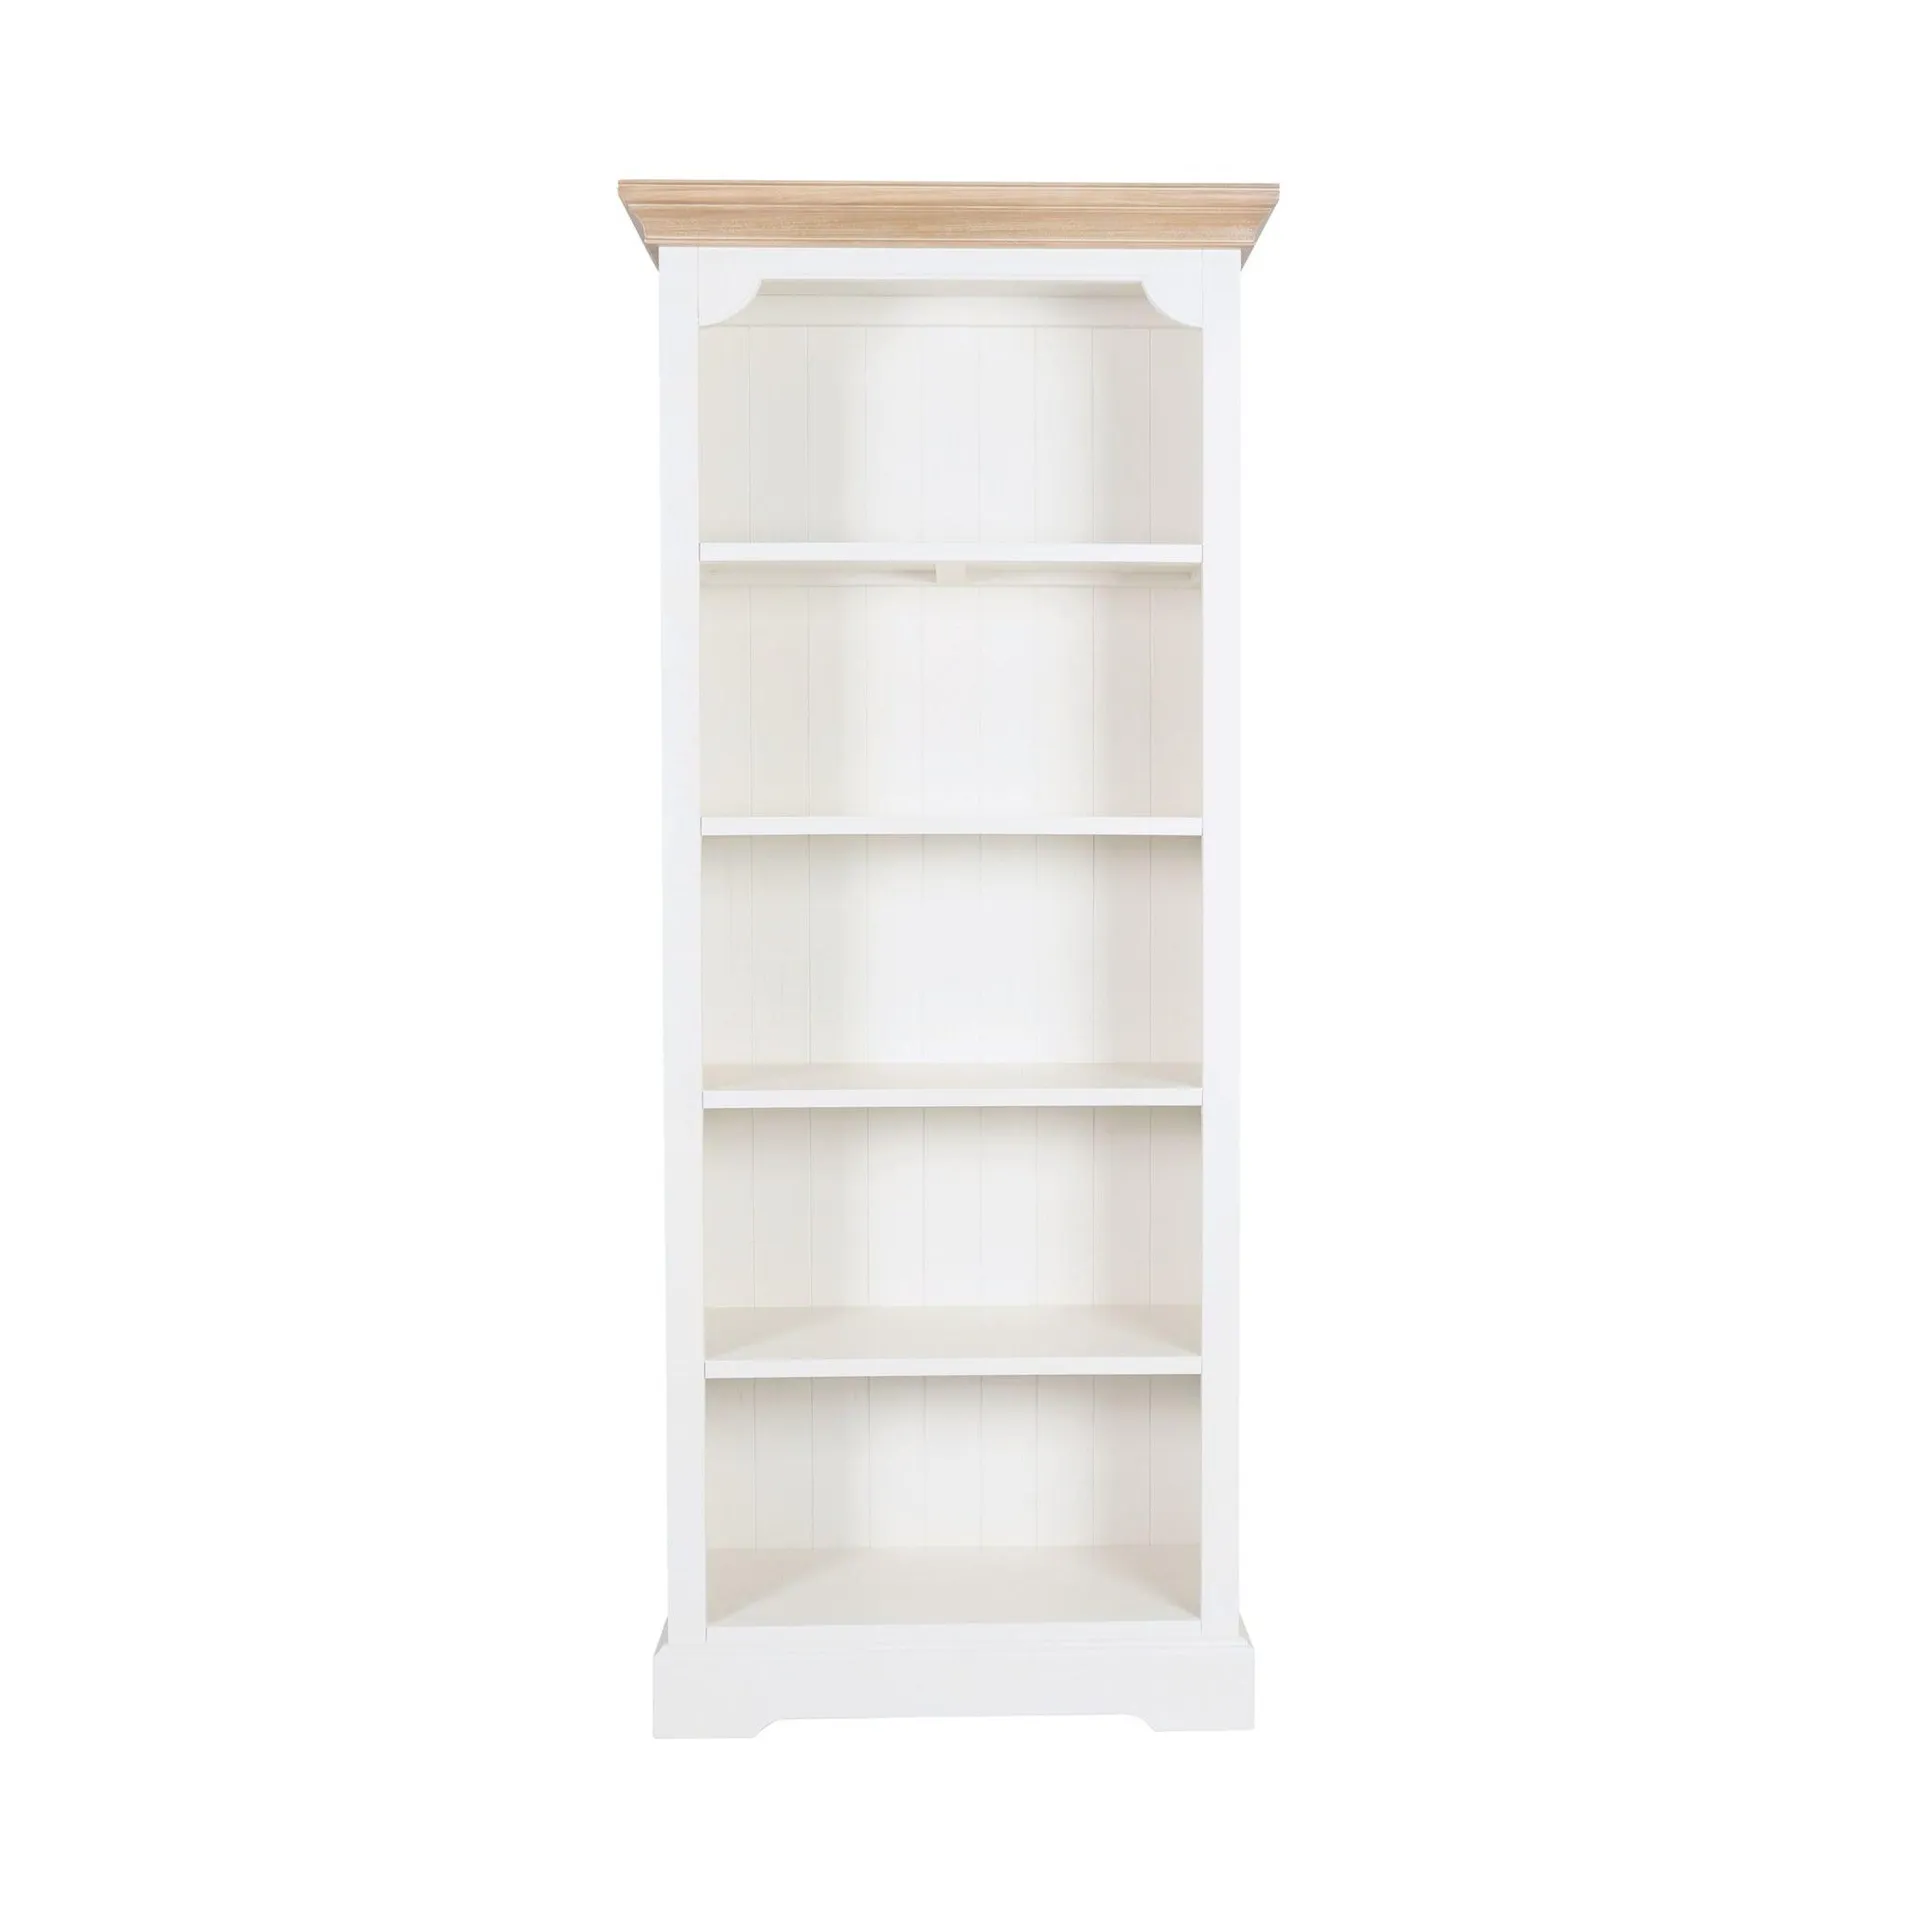 Clover Tall Bookcase 203 x 86cm